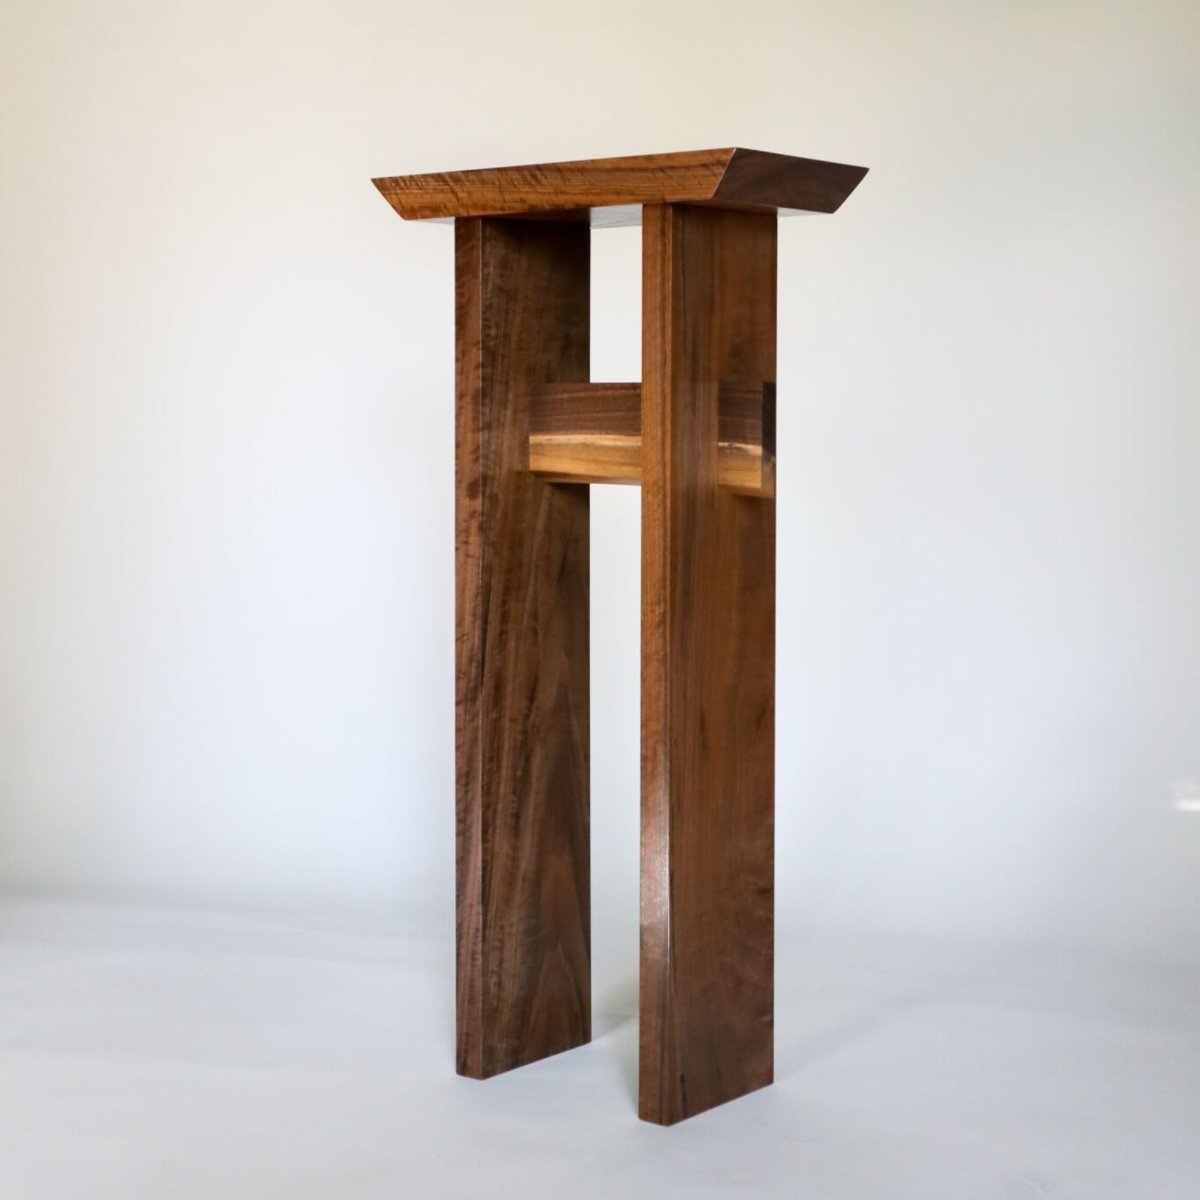 a tall walnut table narrow for entryways by Mokuzai Furniture